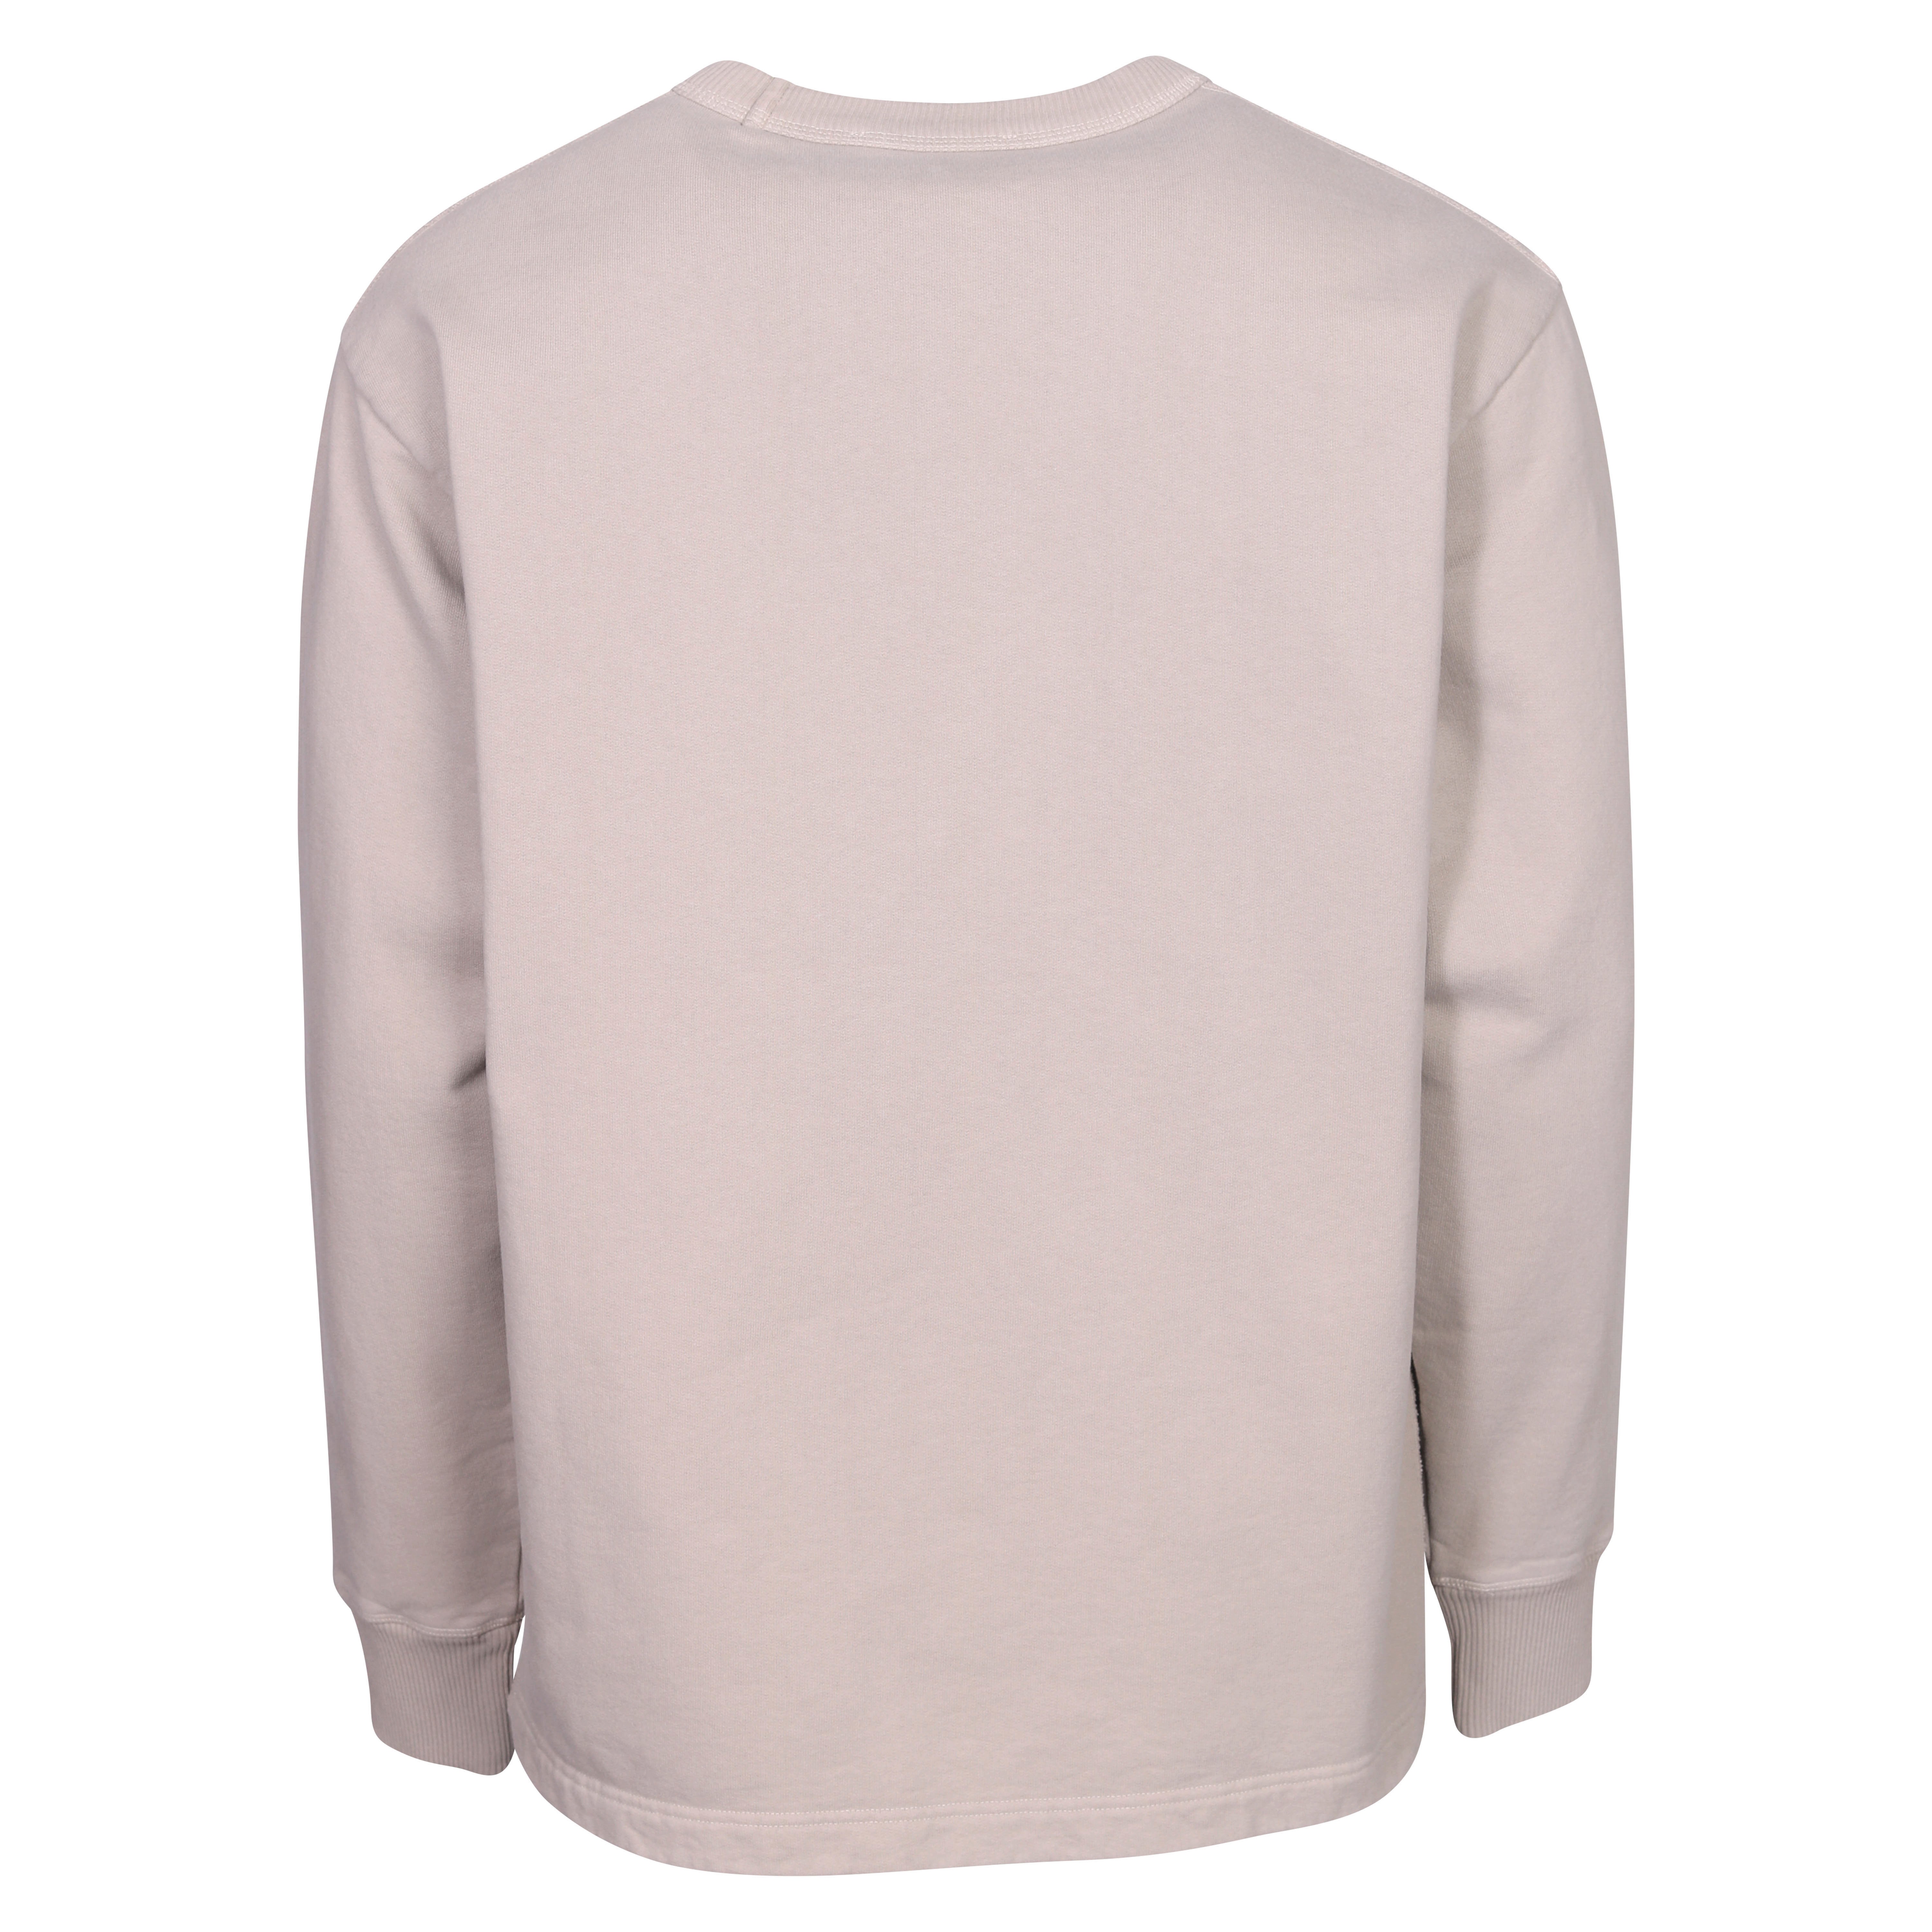 Acne Studios Stamp Sweatshirt in Oyster Grey XS